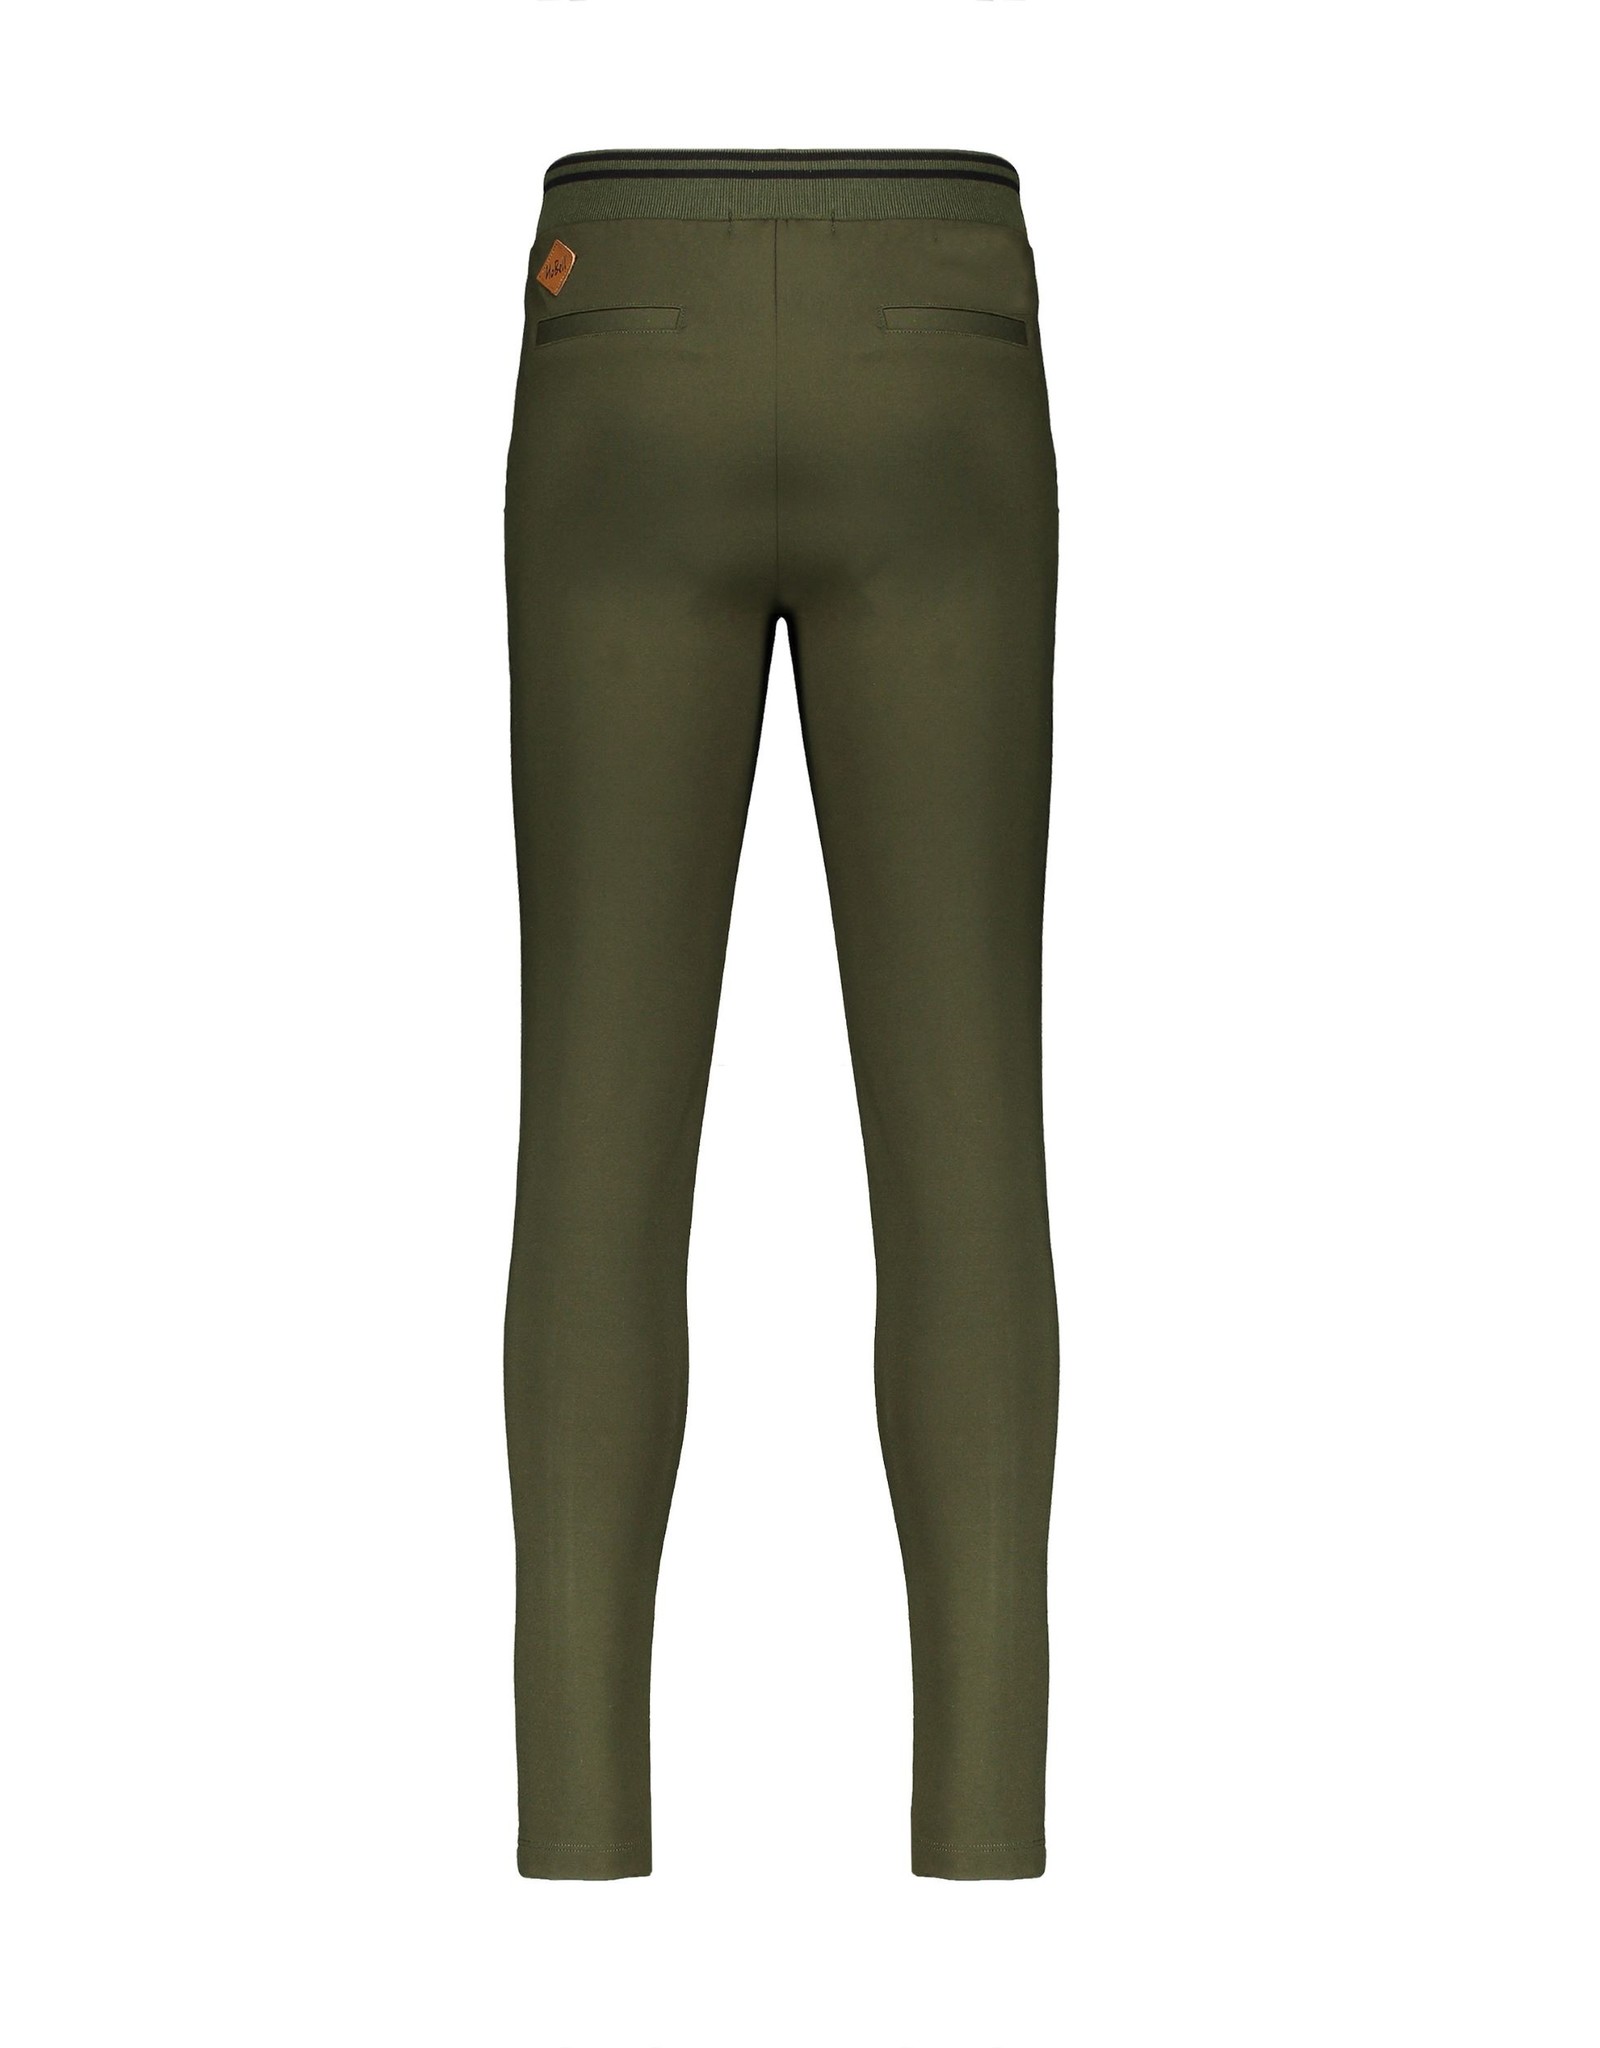 NoBell NoBell  pants 3601 army green